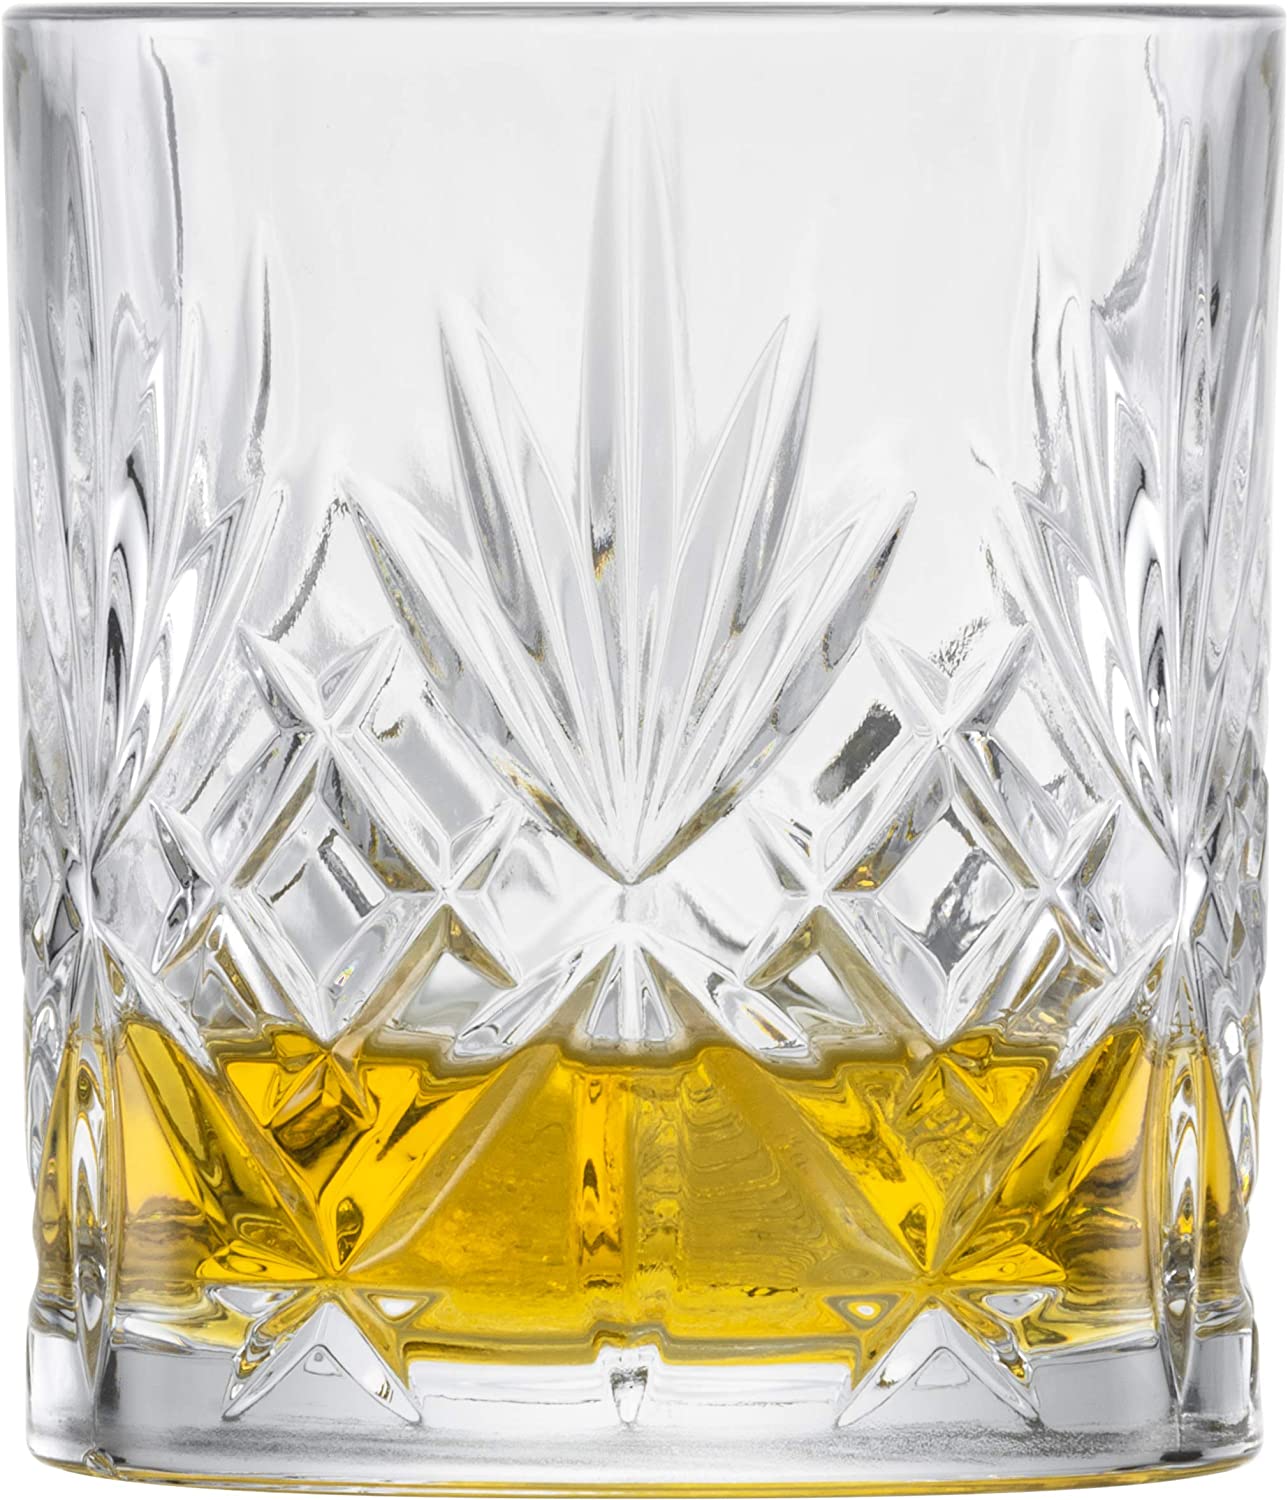 Schott Zwiesel Zwiesel Whisky Show Set of 60 Whisky Glasses Height 9.4 cm Diameter 8.0 cm Volume 334 ml